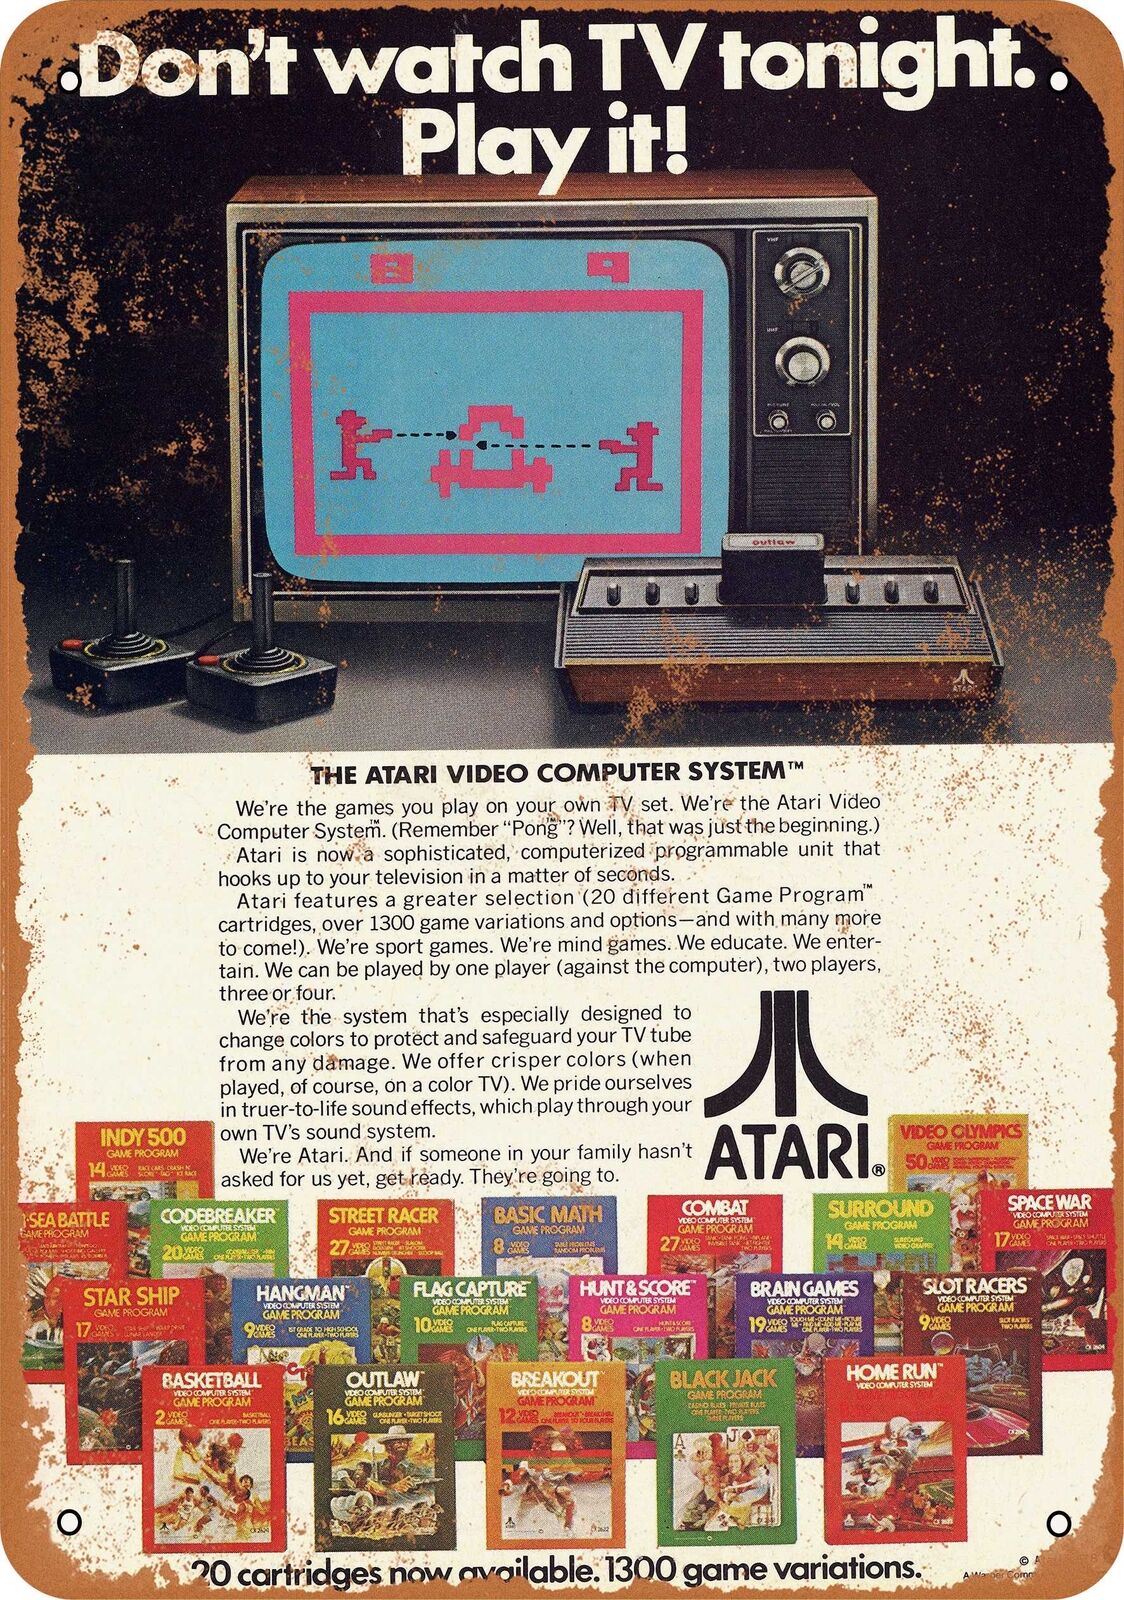 Metal Sign - 1979 Atari Video Computer System - Vintage Look Reproduction